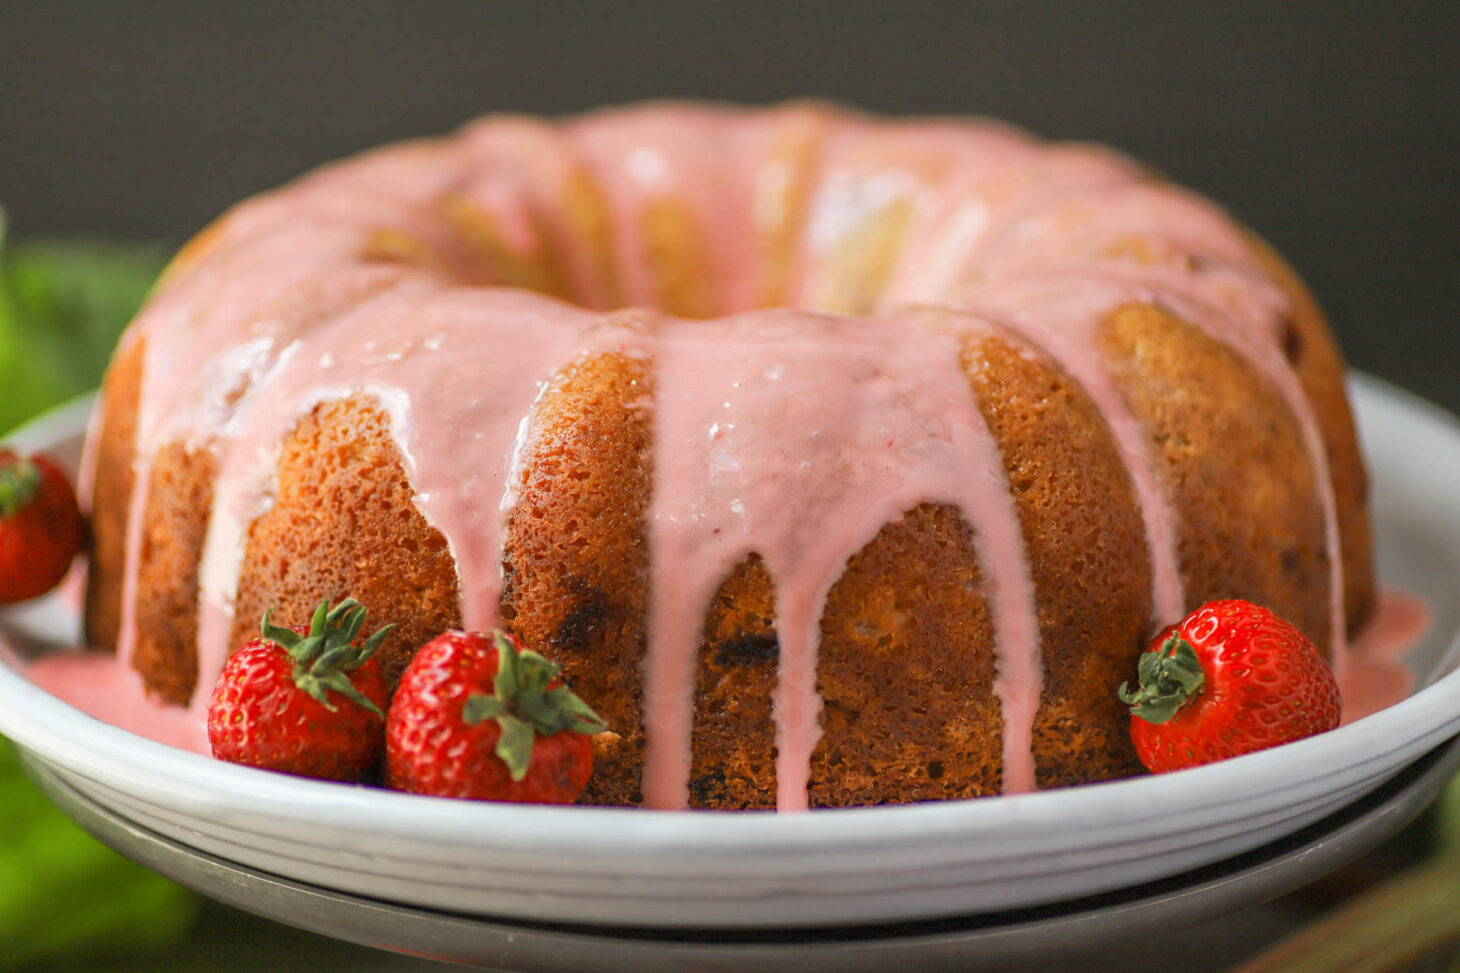 A golden baked bundt cake topped with pink glaze.